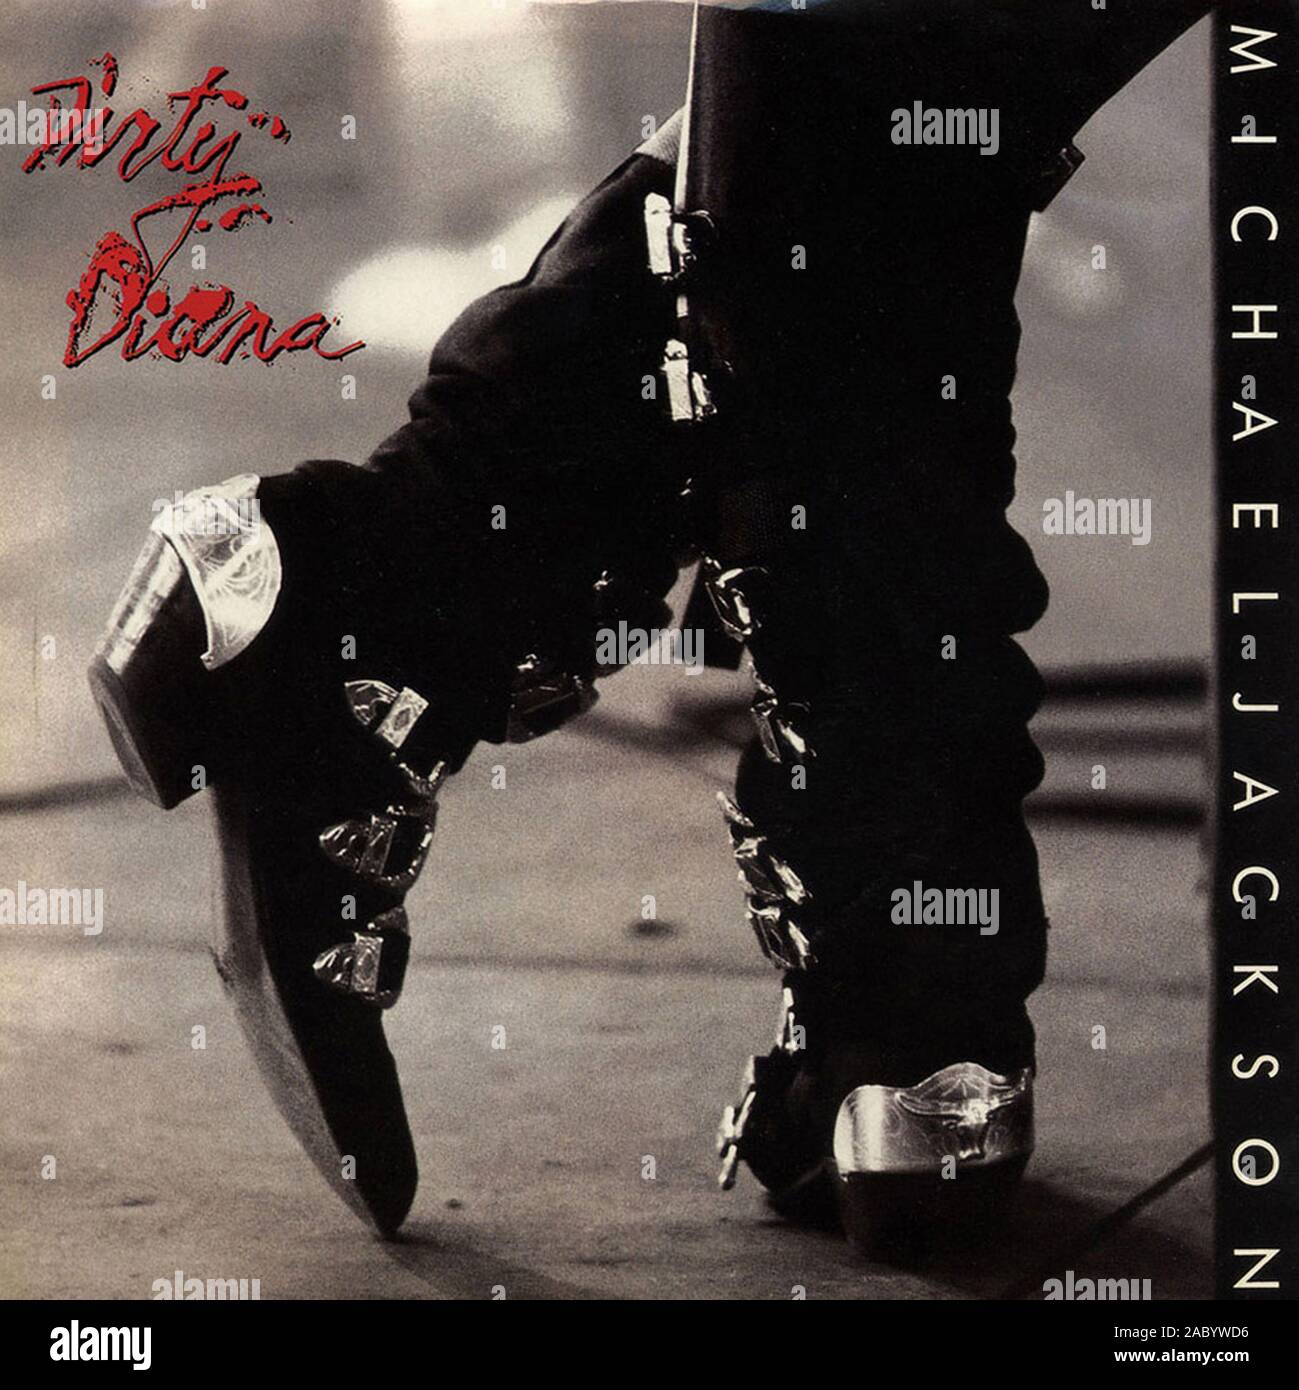 Michael Jackson - Dirty Diana - Vintage vinyl album cover Stock Photo -  Alamy